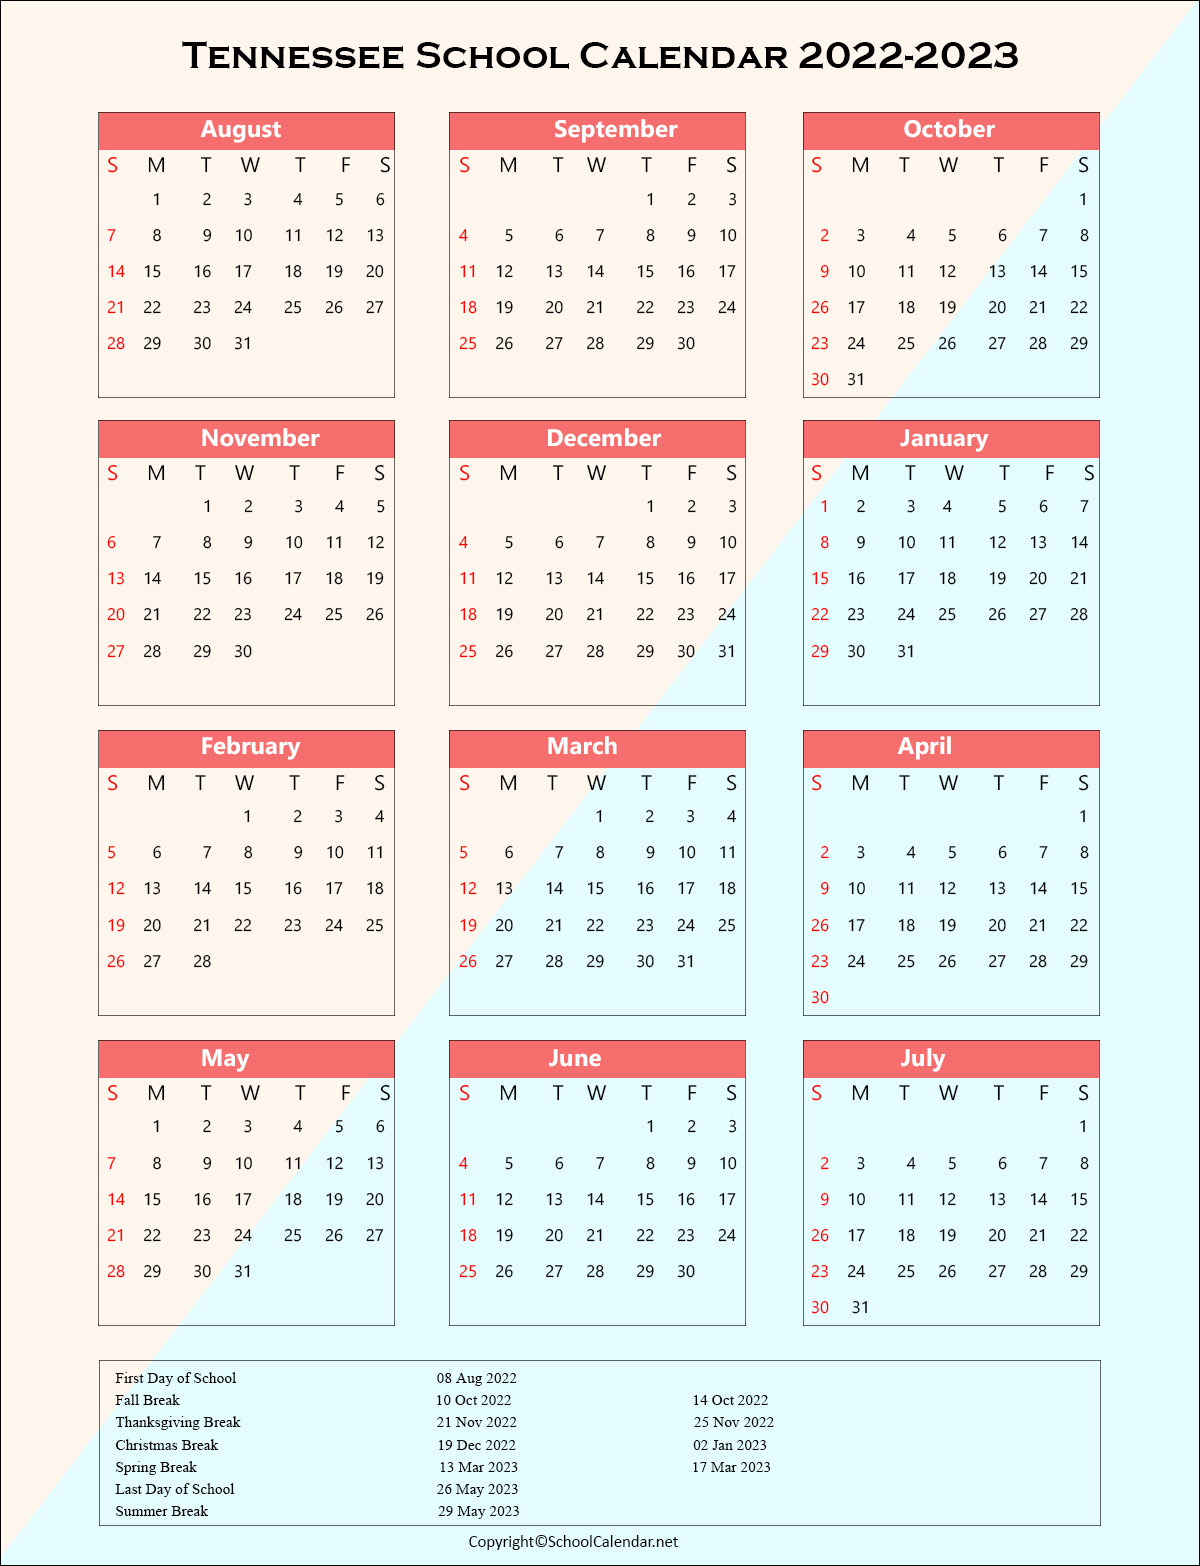 Tennessee School Holiday Calendar 2022